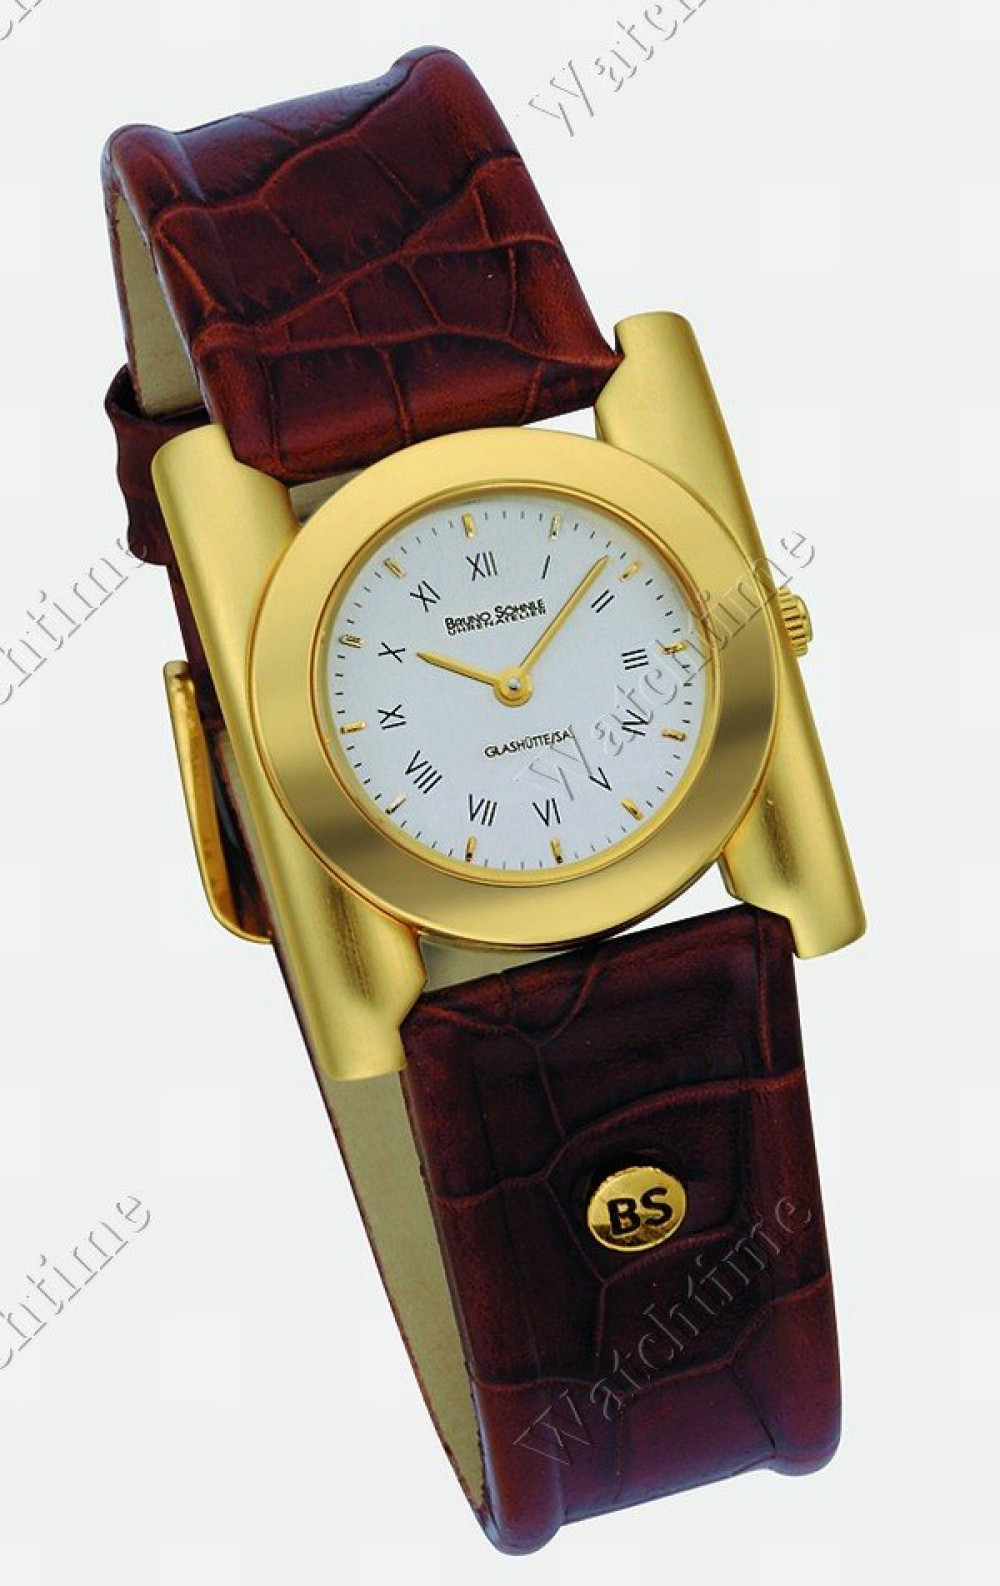 Zegarek firmy Bruno Söhnle, model Cortona